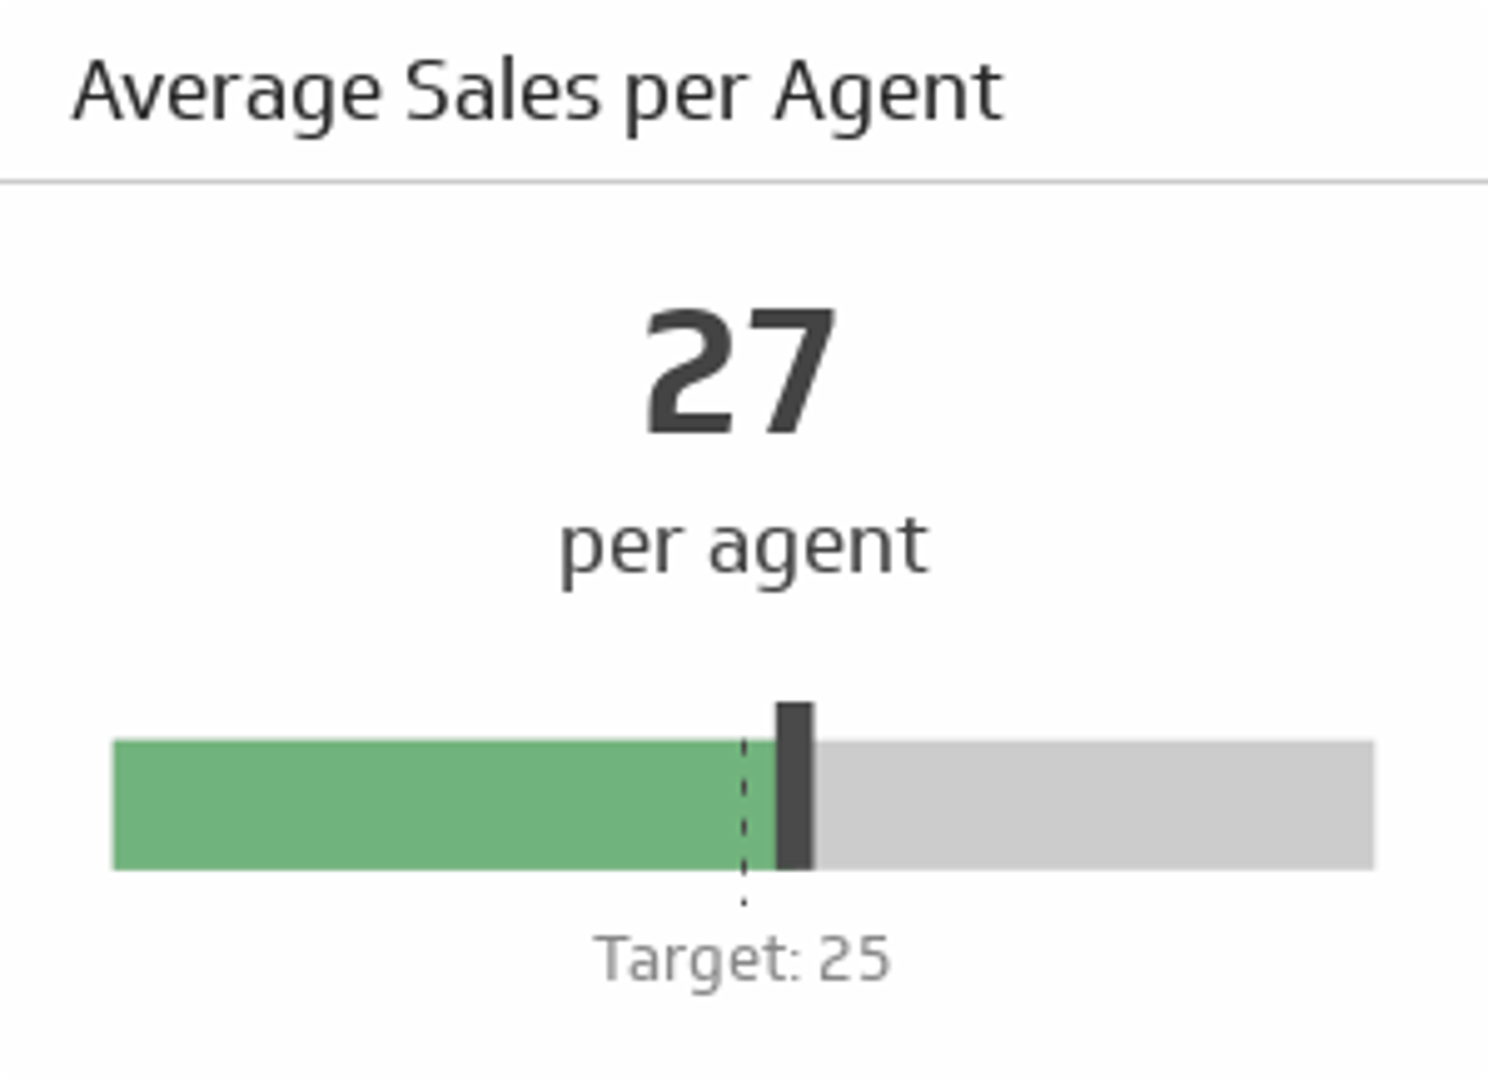 Call Center KPI Examples - Average Sales per Agent Metric